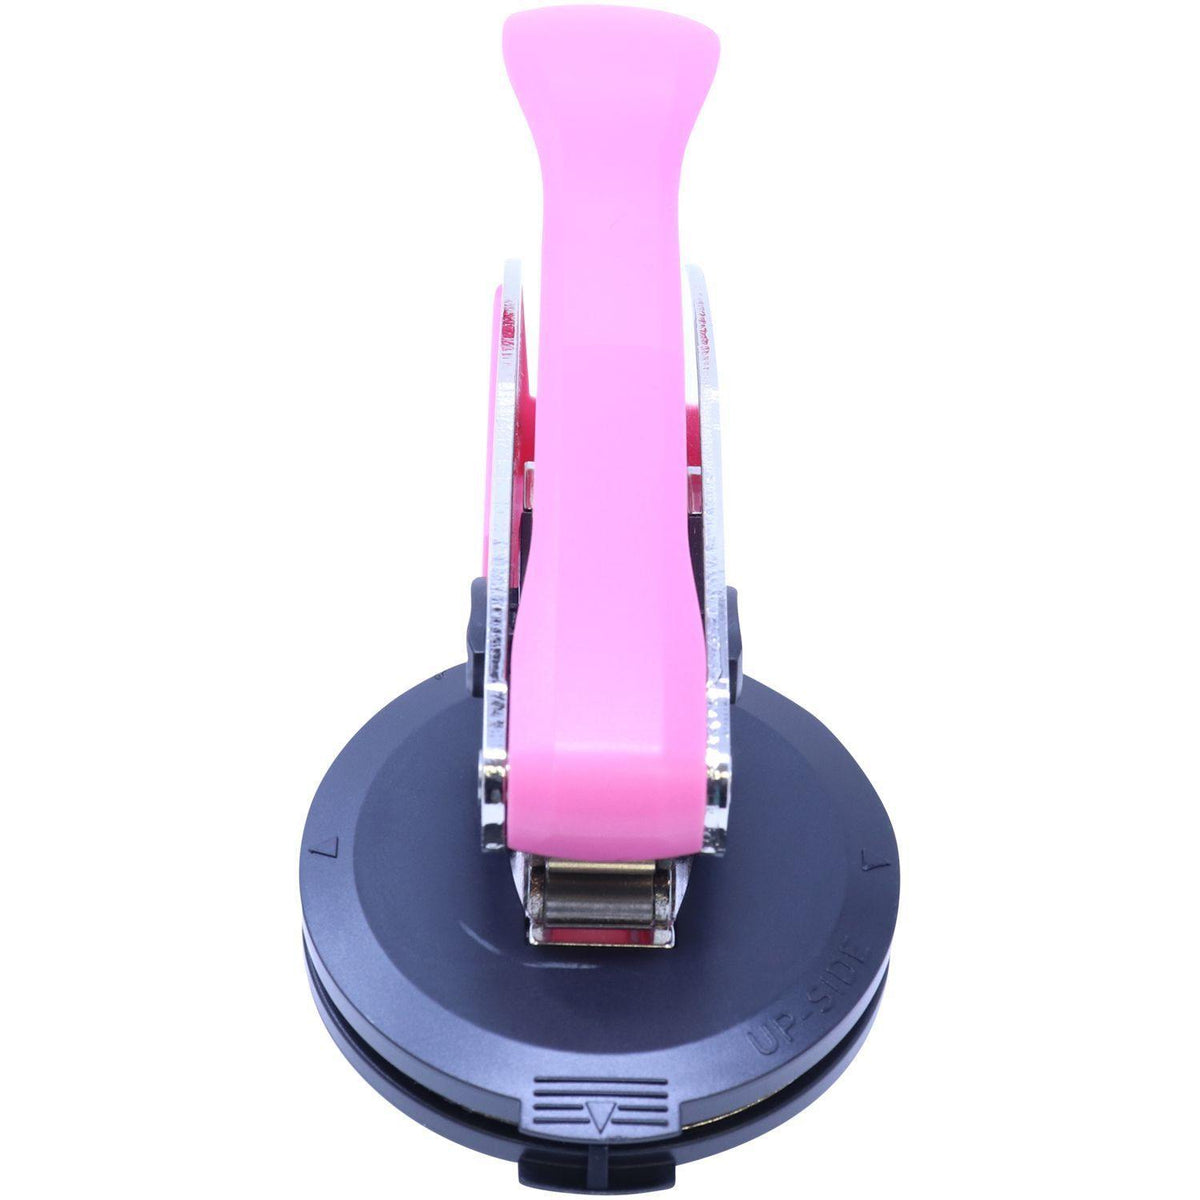 Geologist Pink Hybrid Handheld Embosser - Engineer Seal Stamps - Embosser Type_Handheld, Embosser Type_Hybrid, Type of Use_Professional